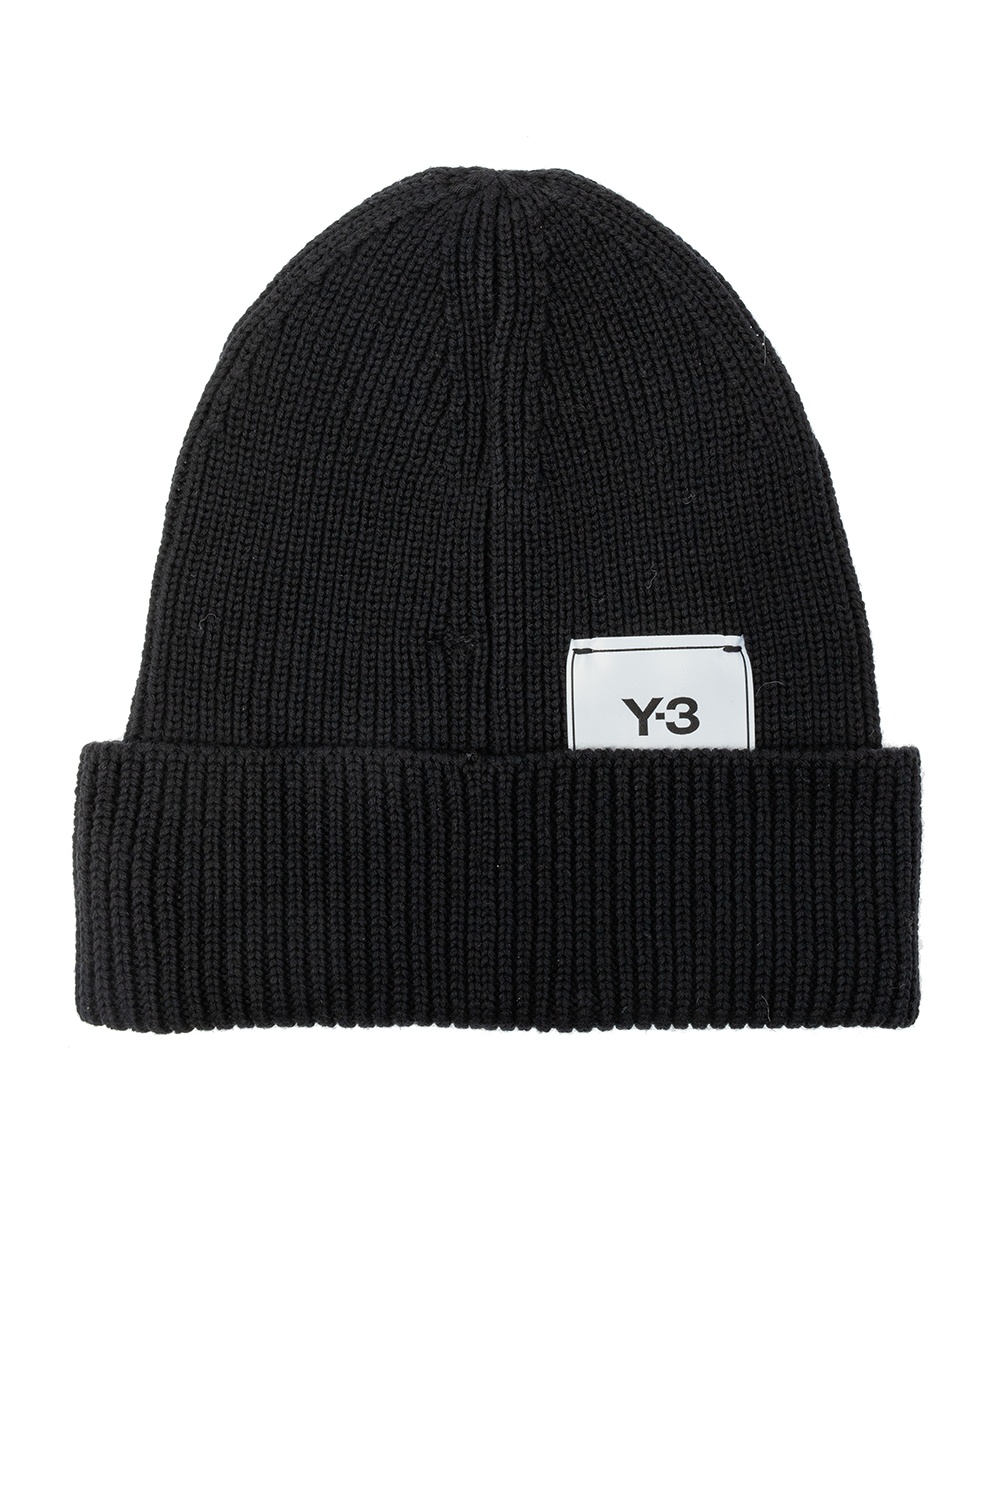 Y-3 Yohji Yamamoto Logo hat